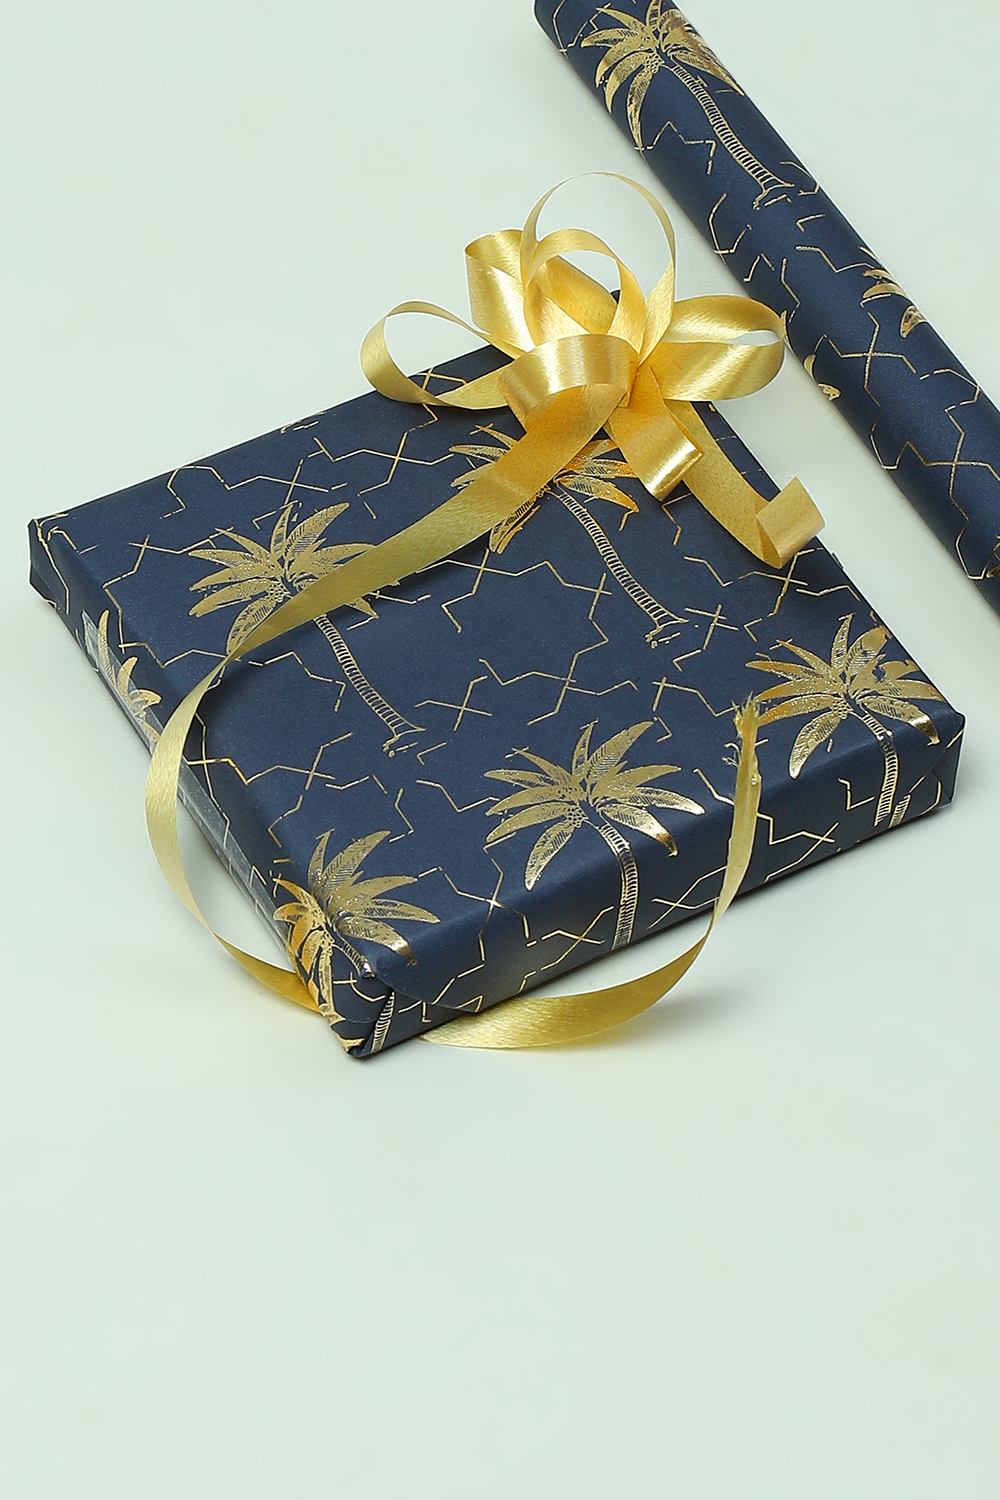 Matte Navy Blue Gift Wrap | Present Paper, Full Ream 833 ft x 30 in